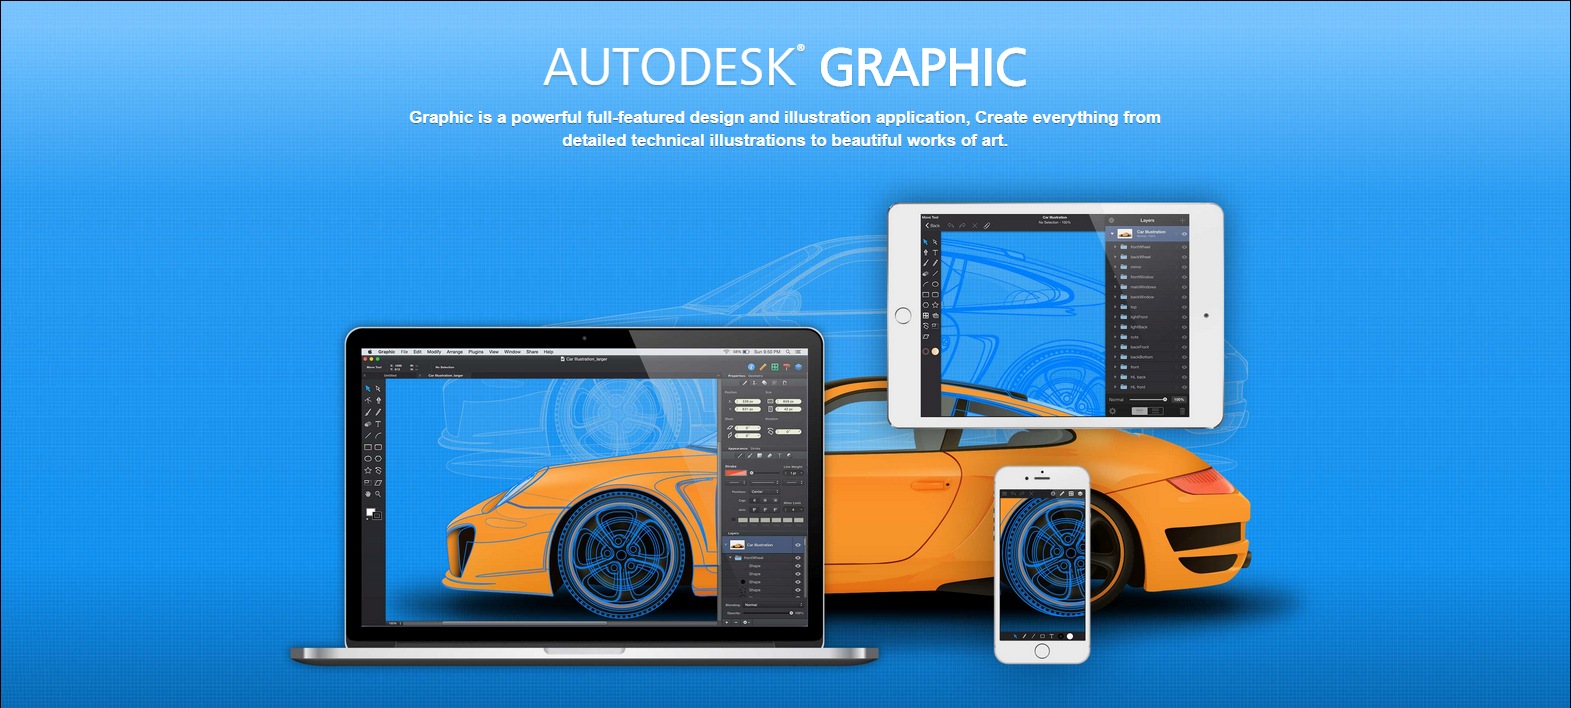 autodesk graphic design software caricature